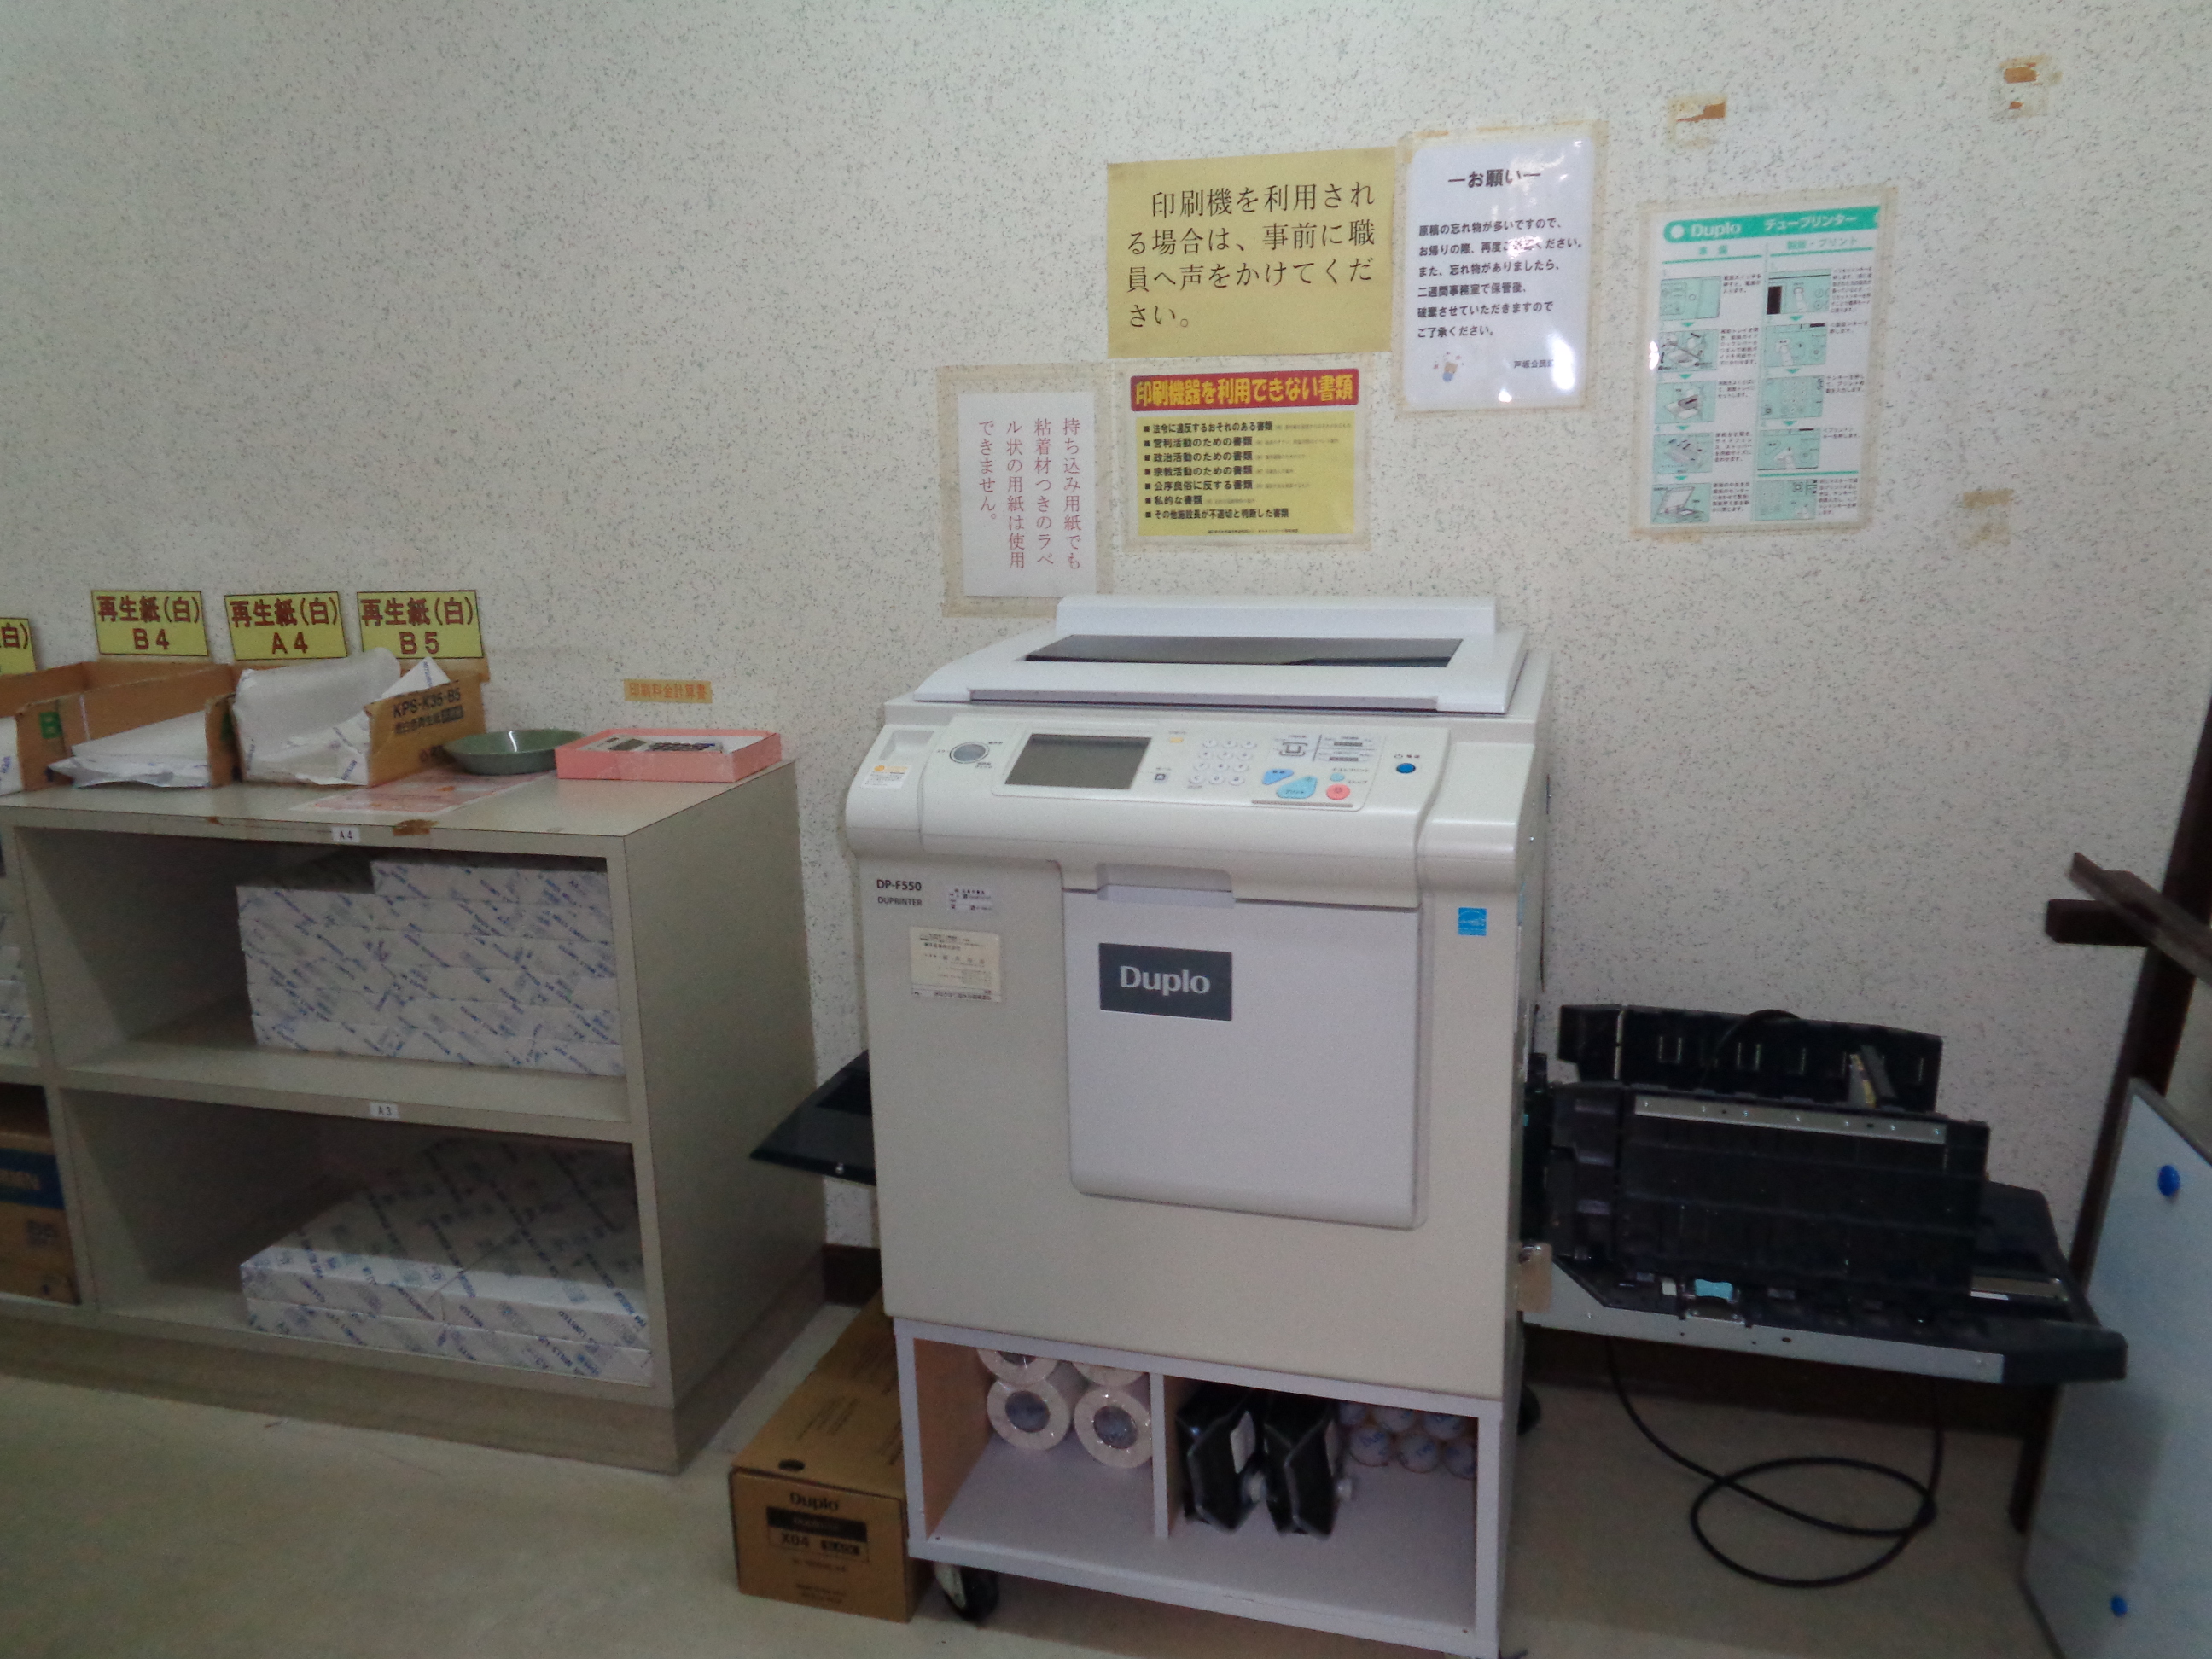 戸坂公民館印刷室の写真